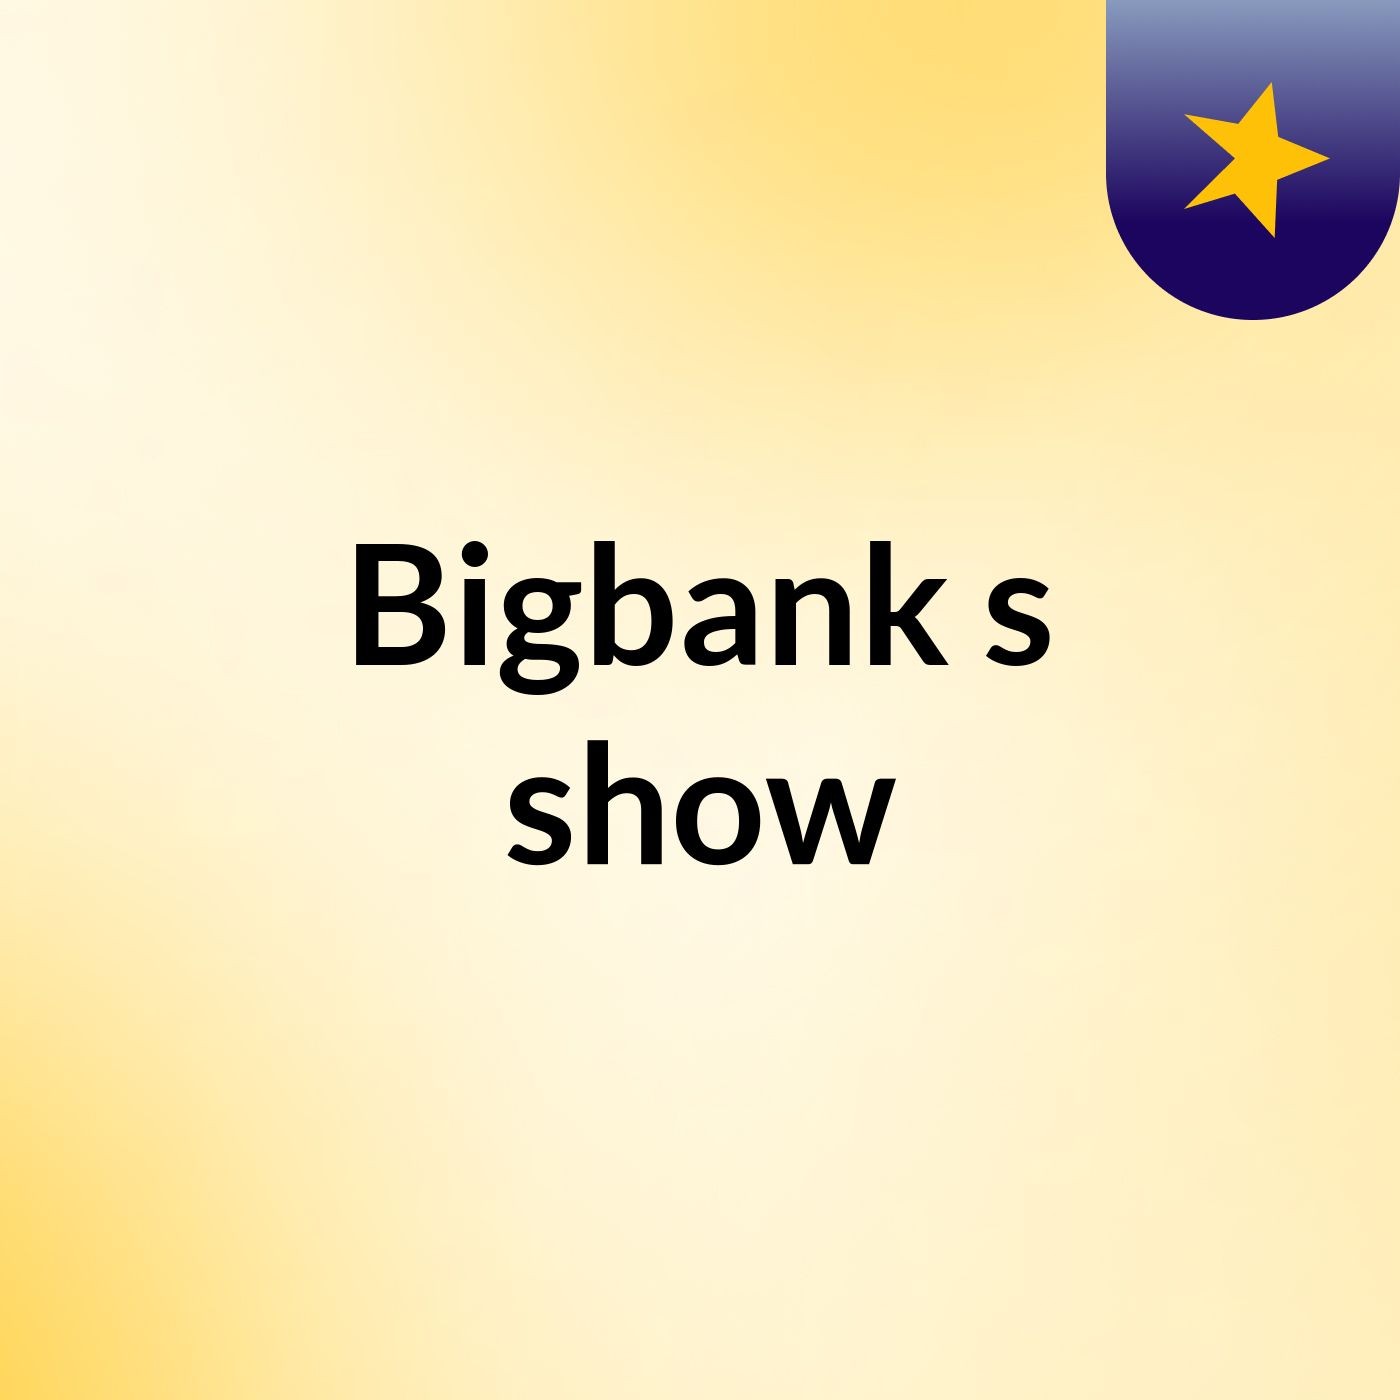 Bigbank's show